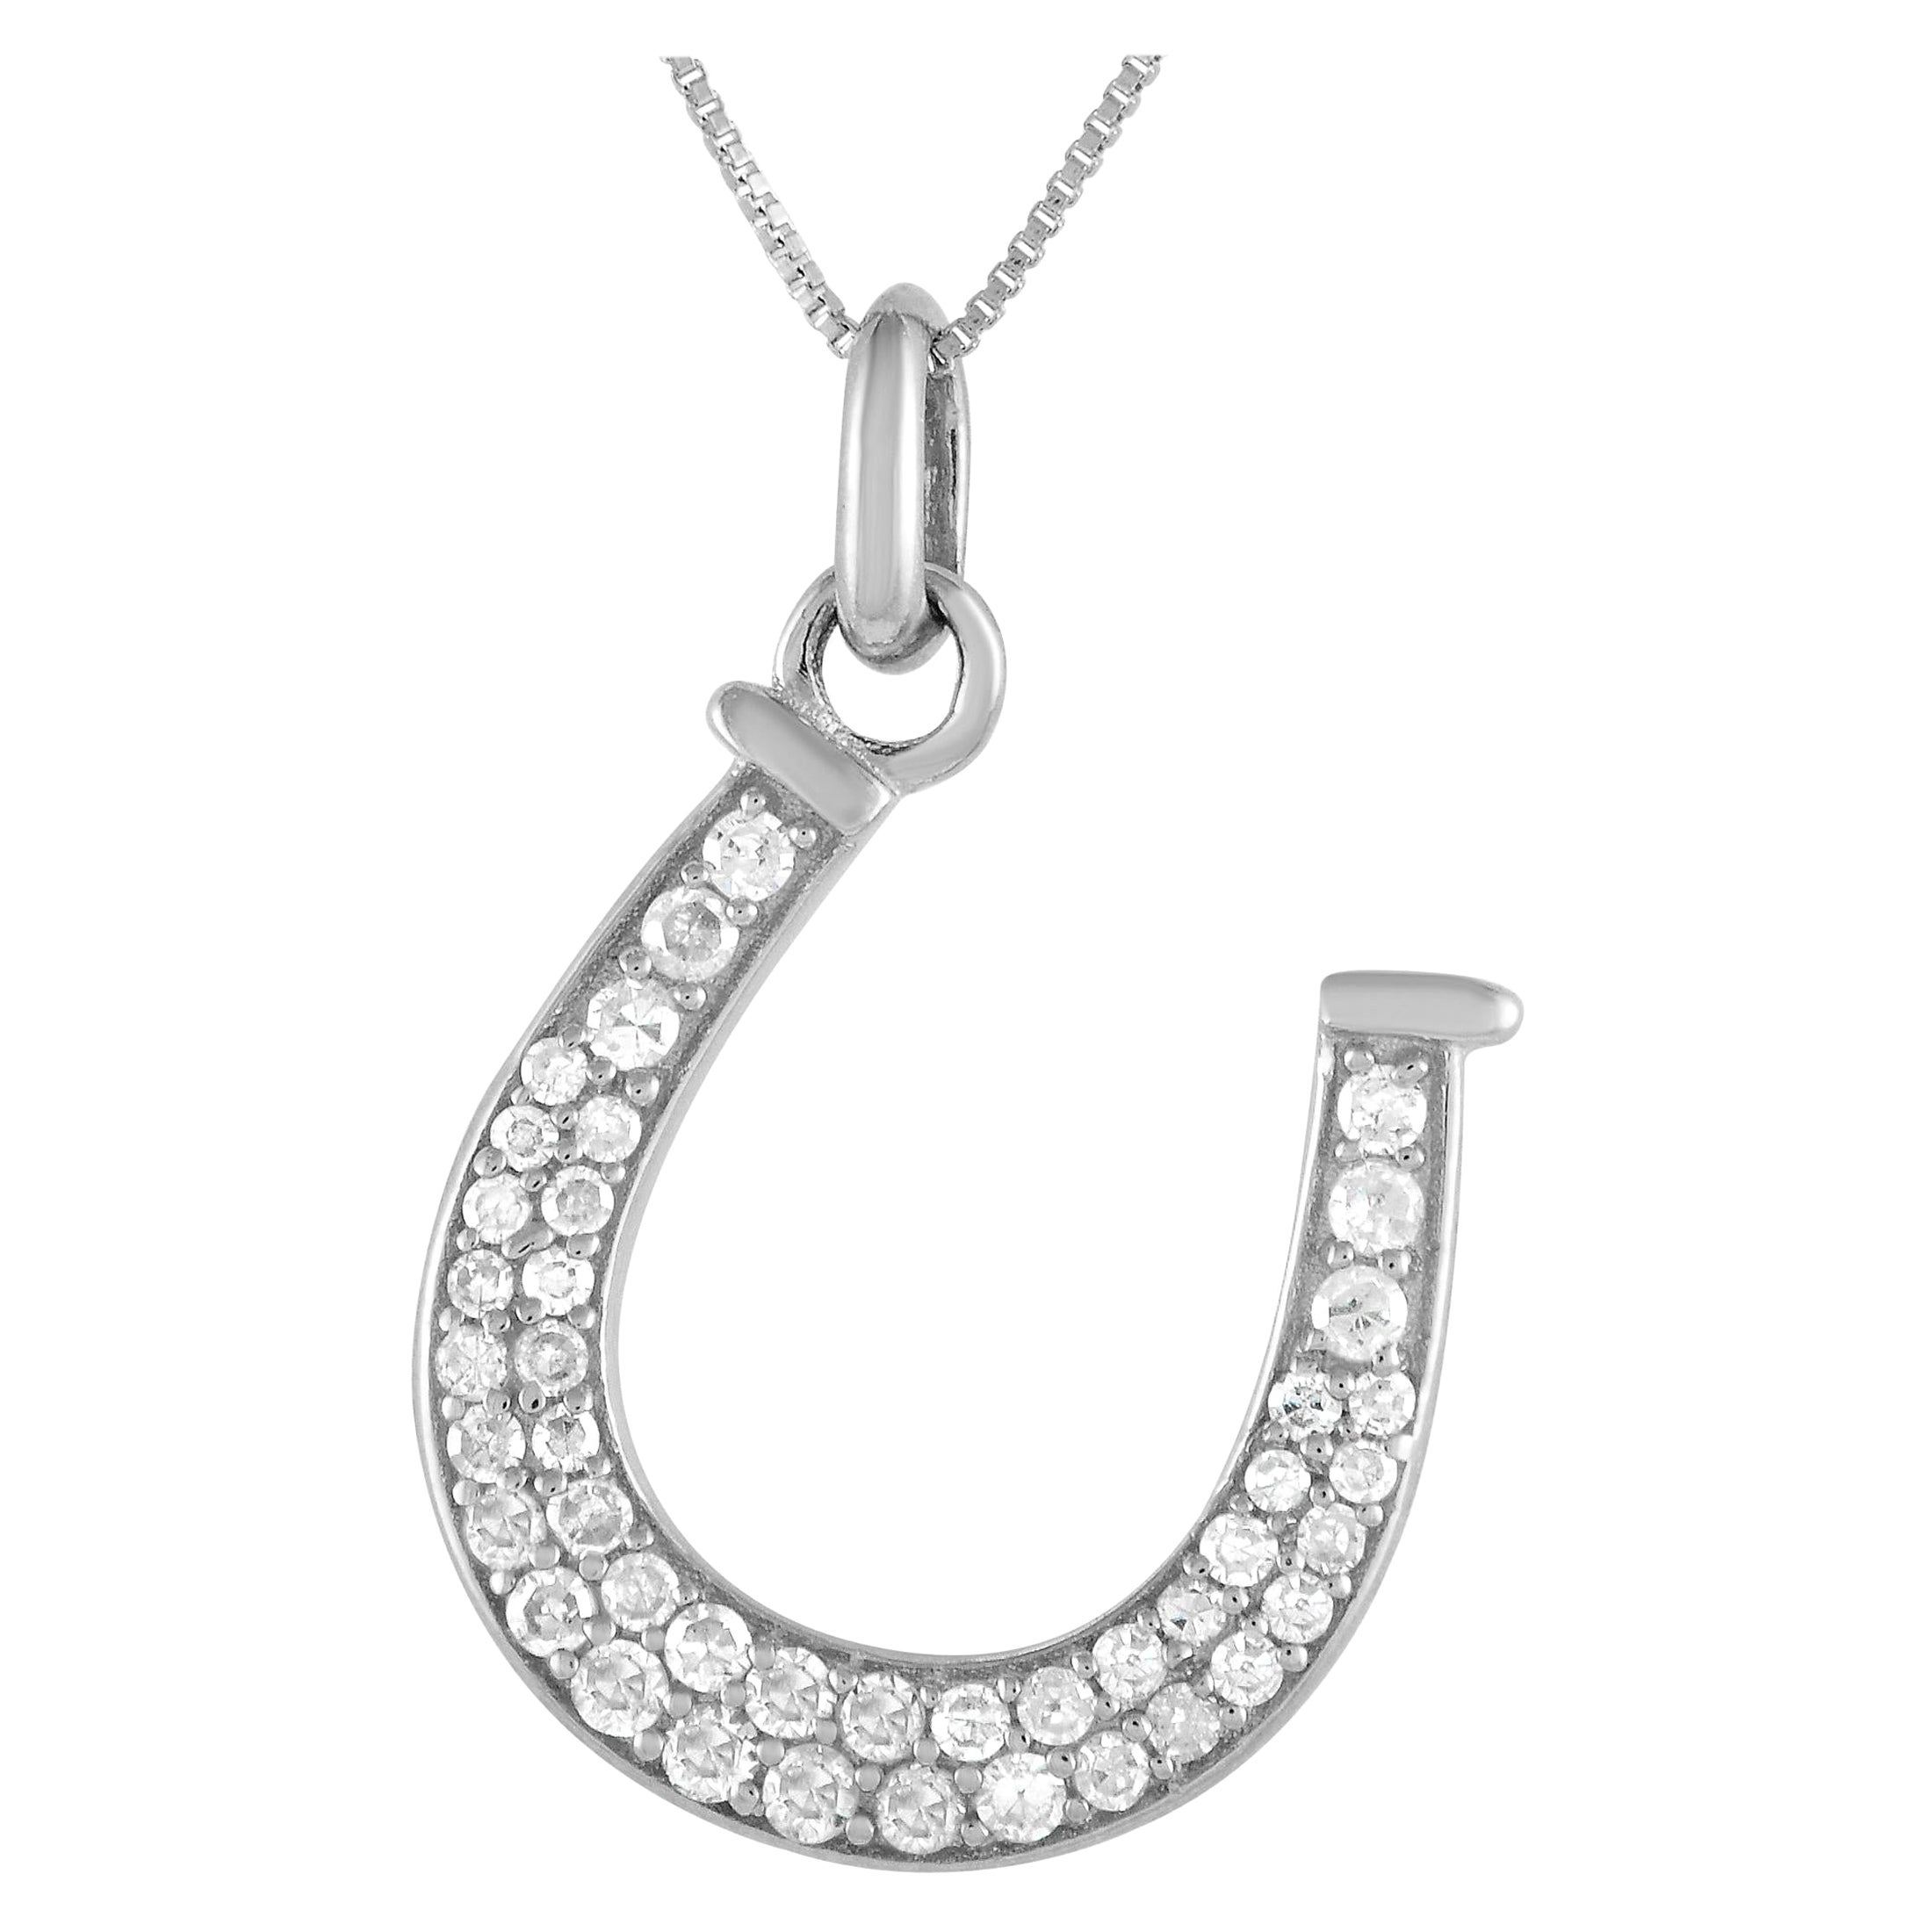 LB Exclusive 14K White Gold 0.18ct Diamond Horseshoe Pendant Necklace PD4-15625W For Sale